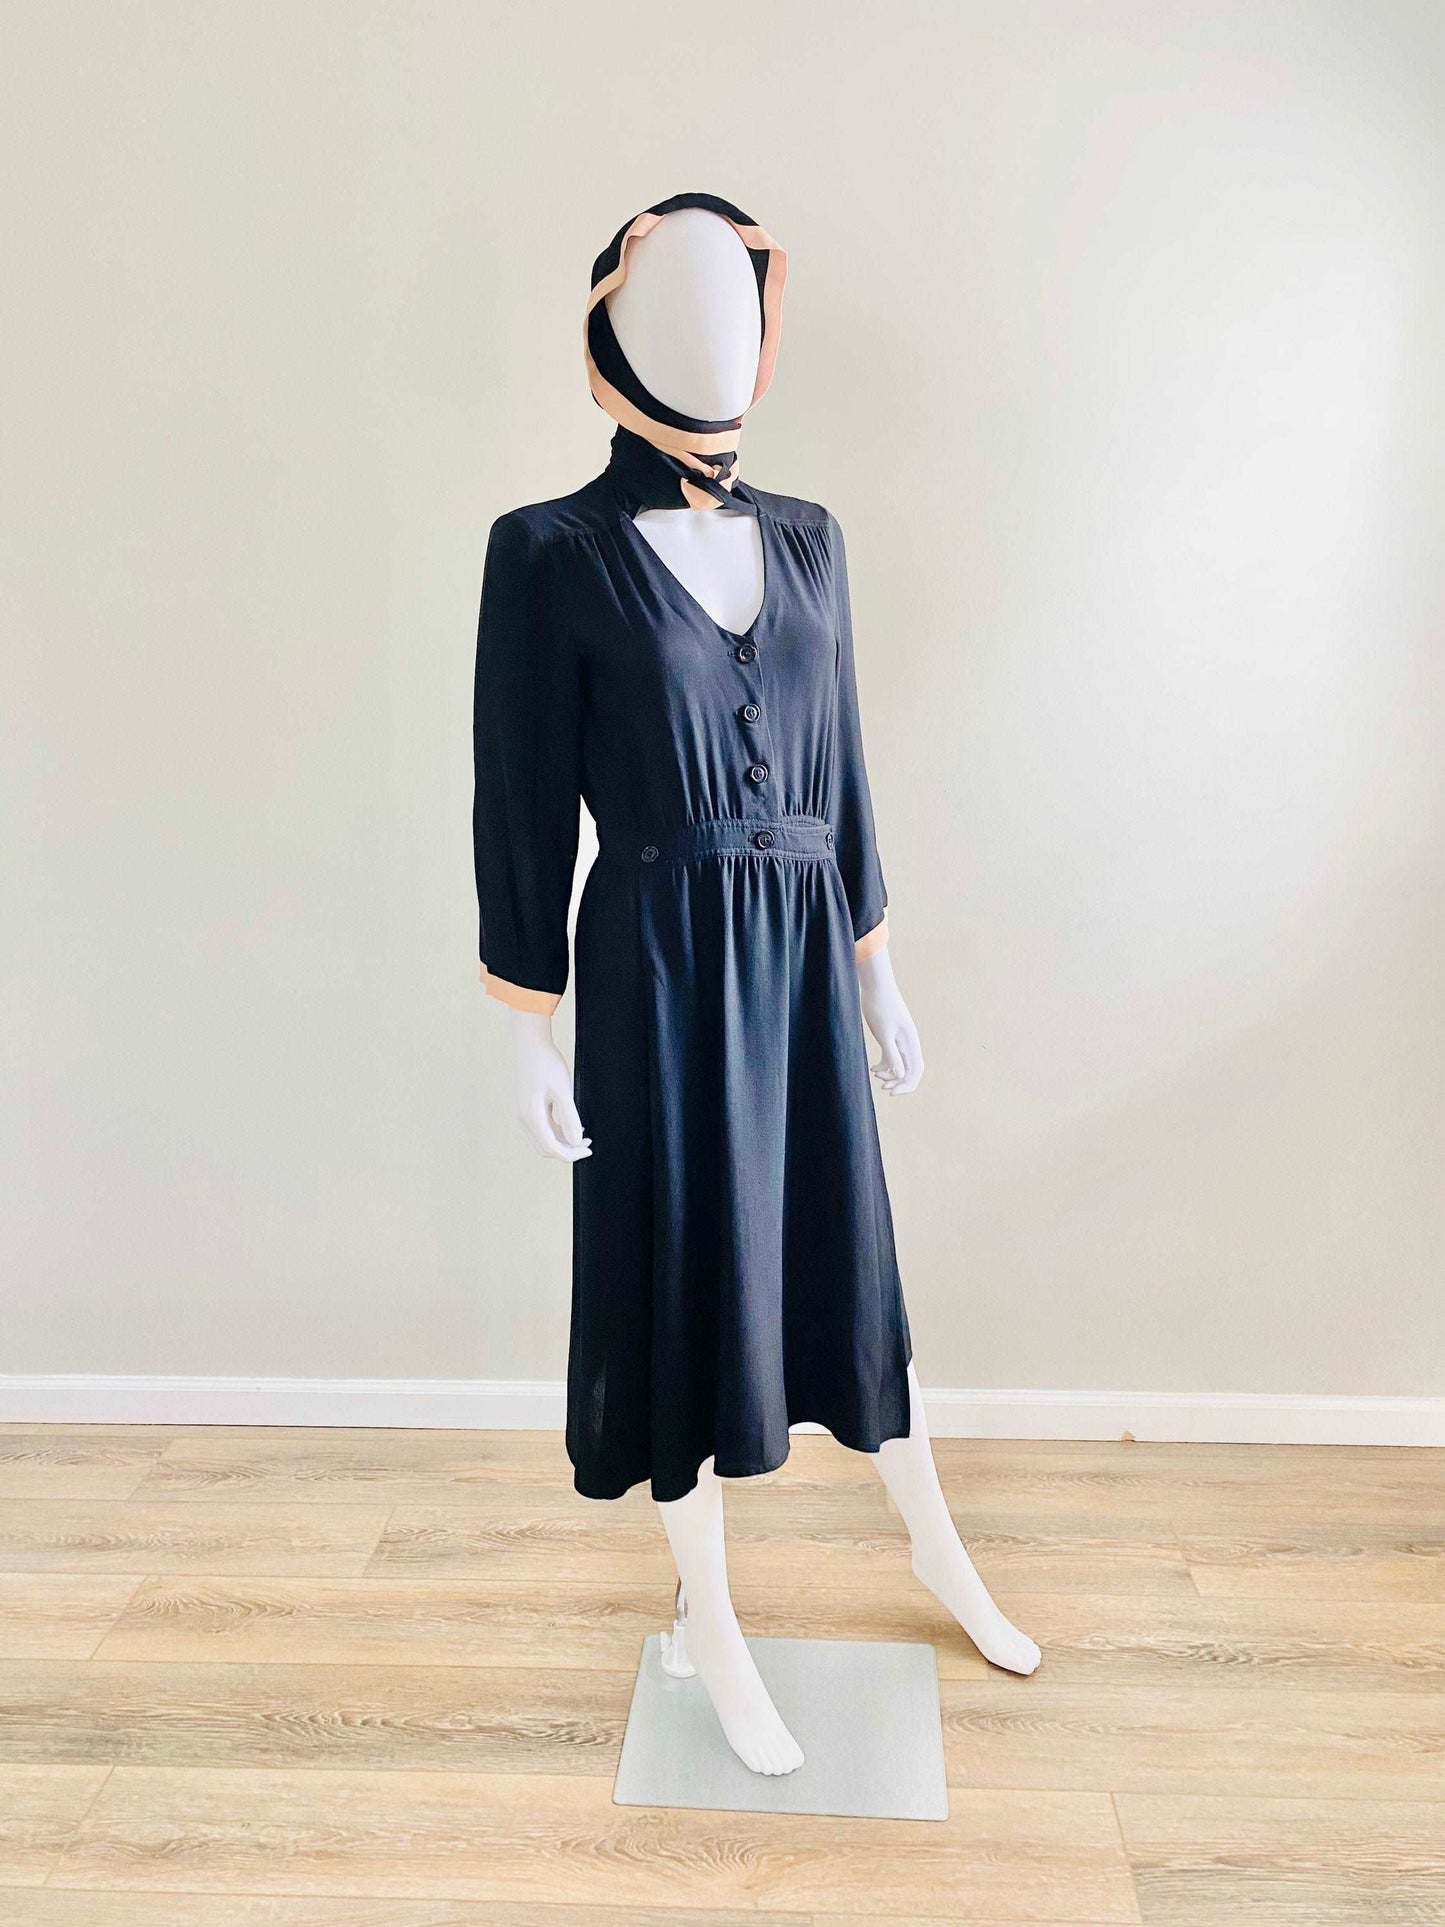 Vintage 1940s Hooded Rayon Crepe Black Dress / 1970s does 1940s convertible Albert Nipon Dress Size M L